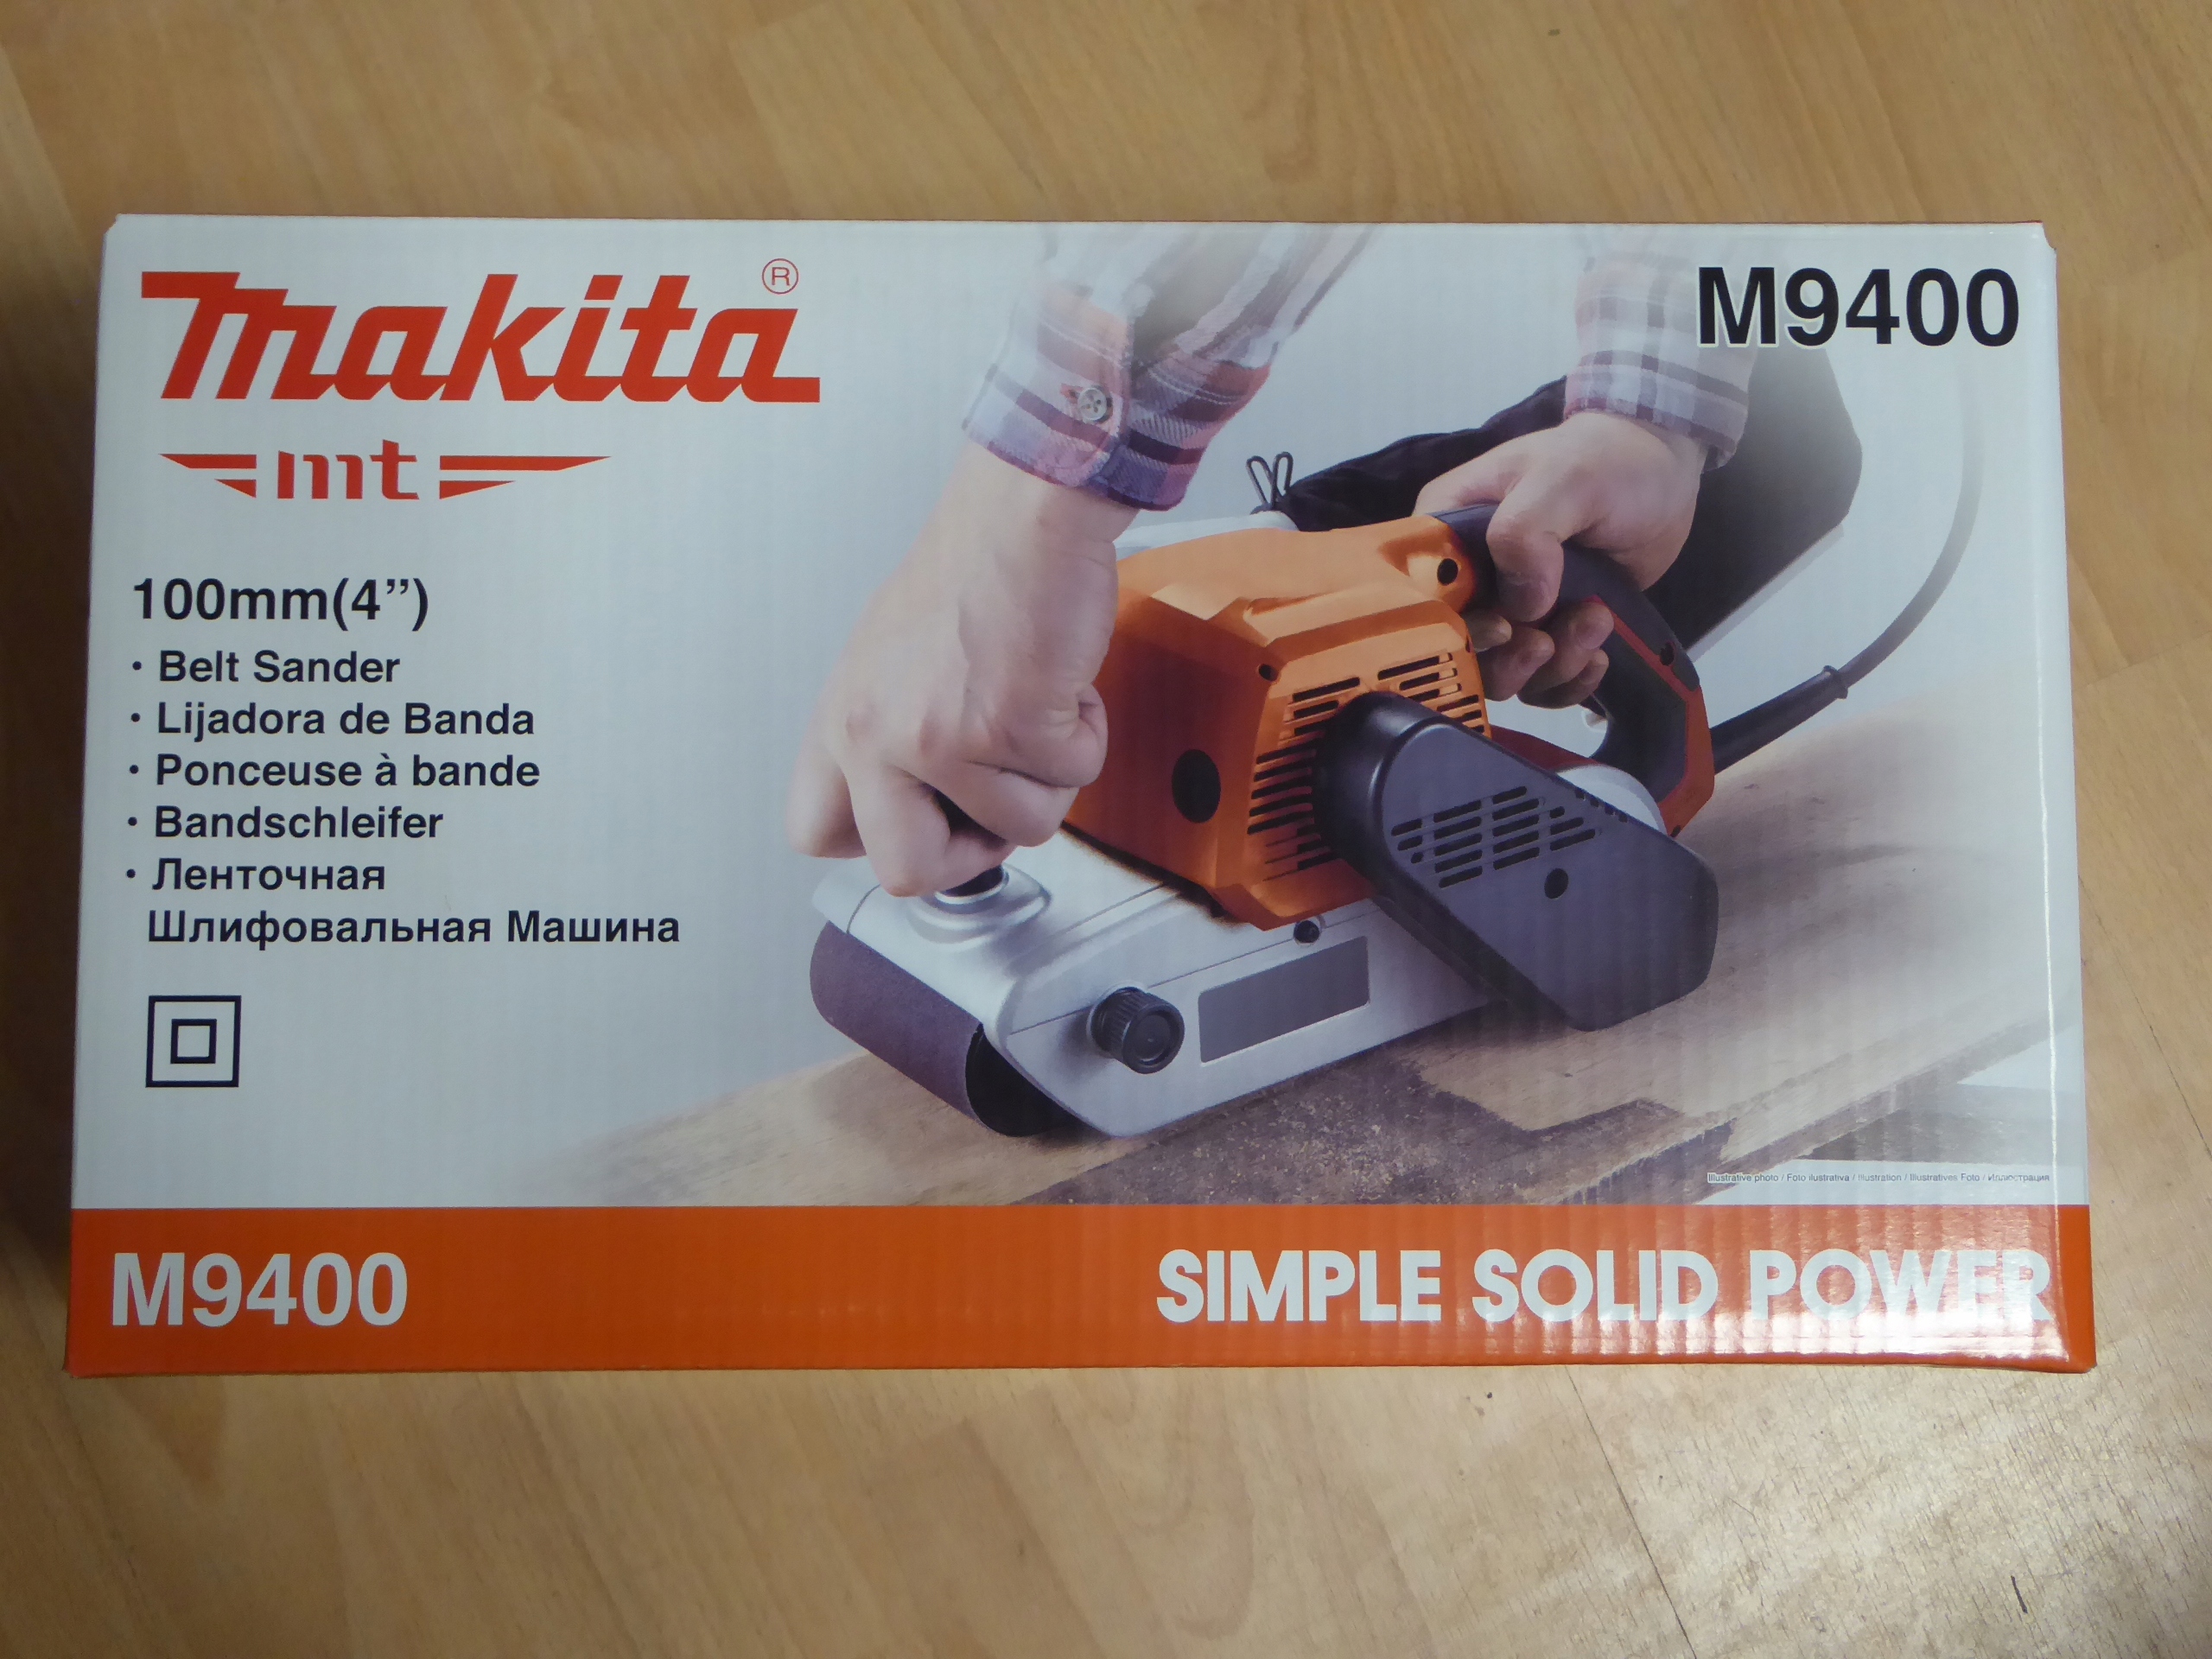 Szlifierka Taśmowa MAKITA-MT M9400 100mm (M9400) • Cena, Opinie 10081092755  • Allegro.pl